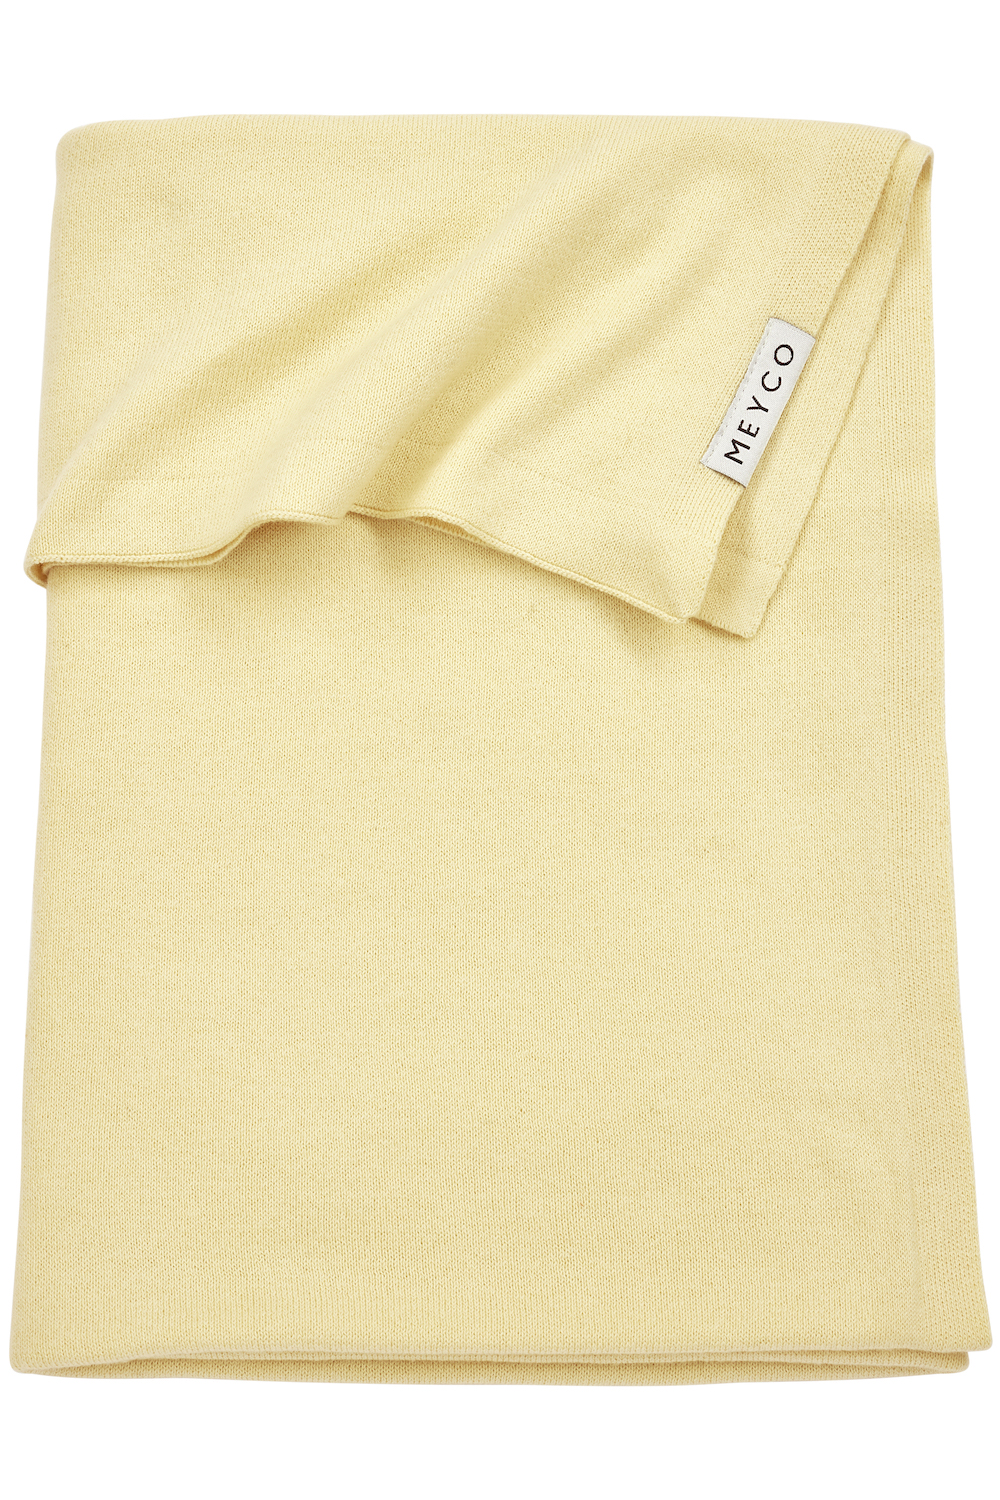 Wiegdeken Knit Basic - Soft Yellow - 75x100cm